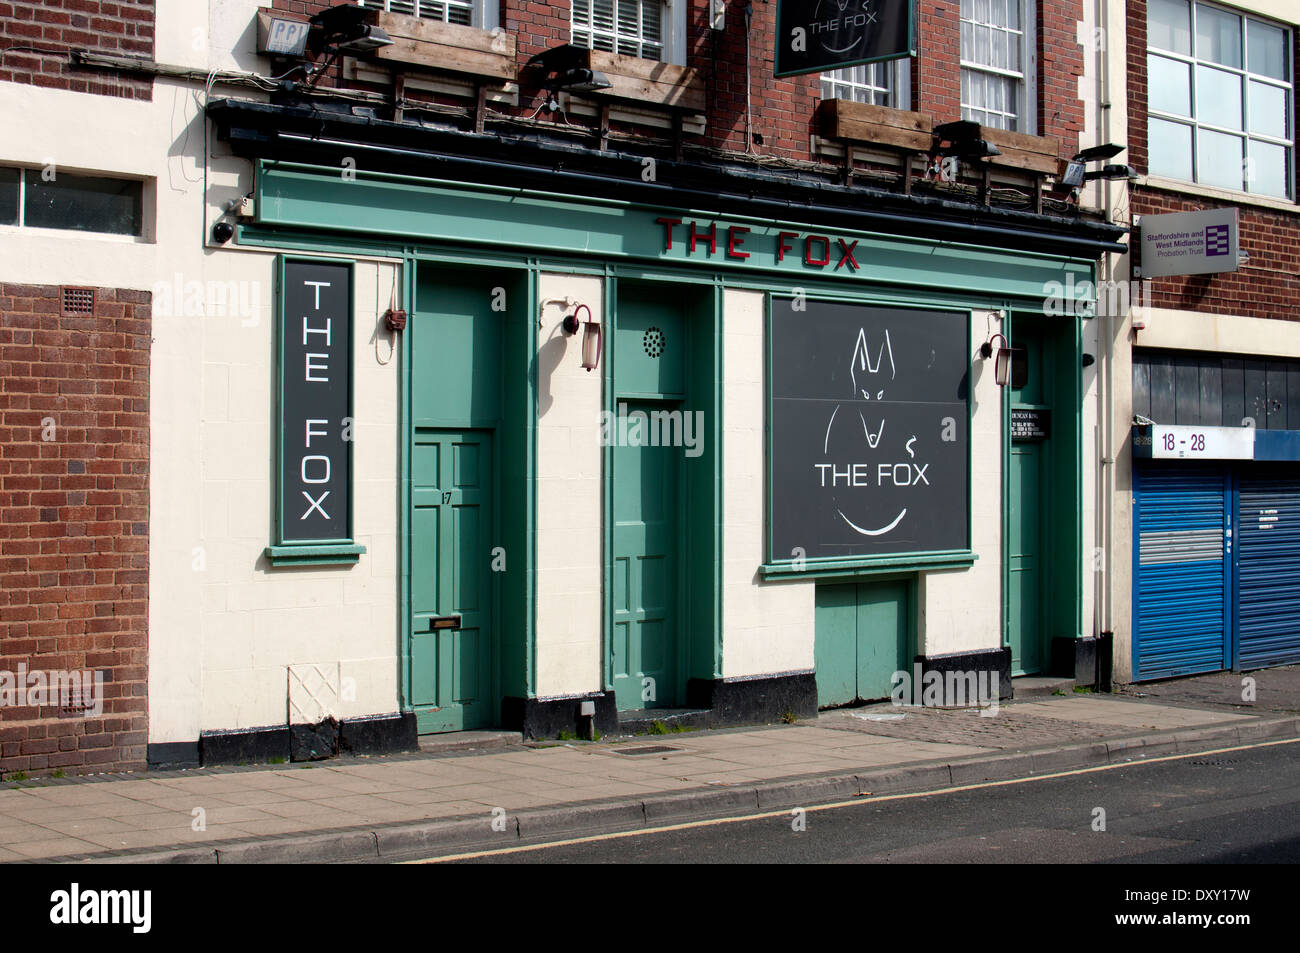 Gay Village, Birmingham, UK. The Fox pub. Stock Photo